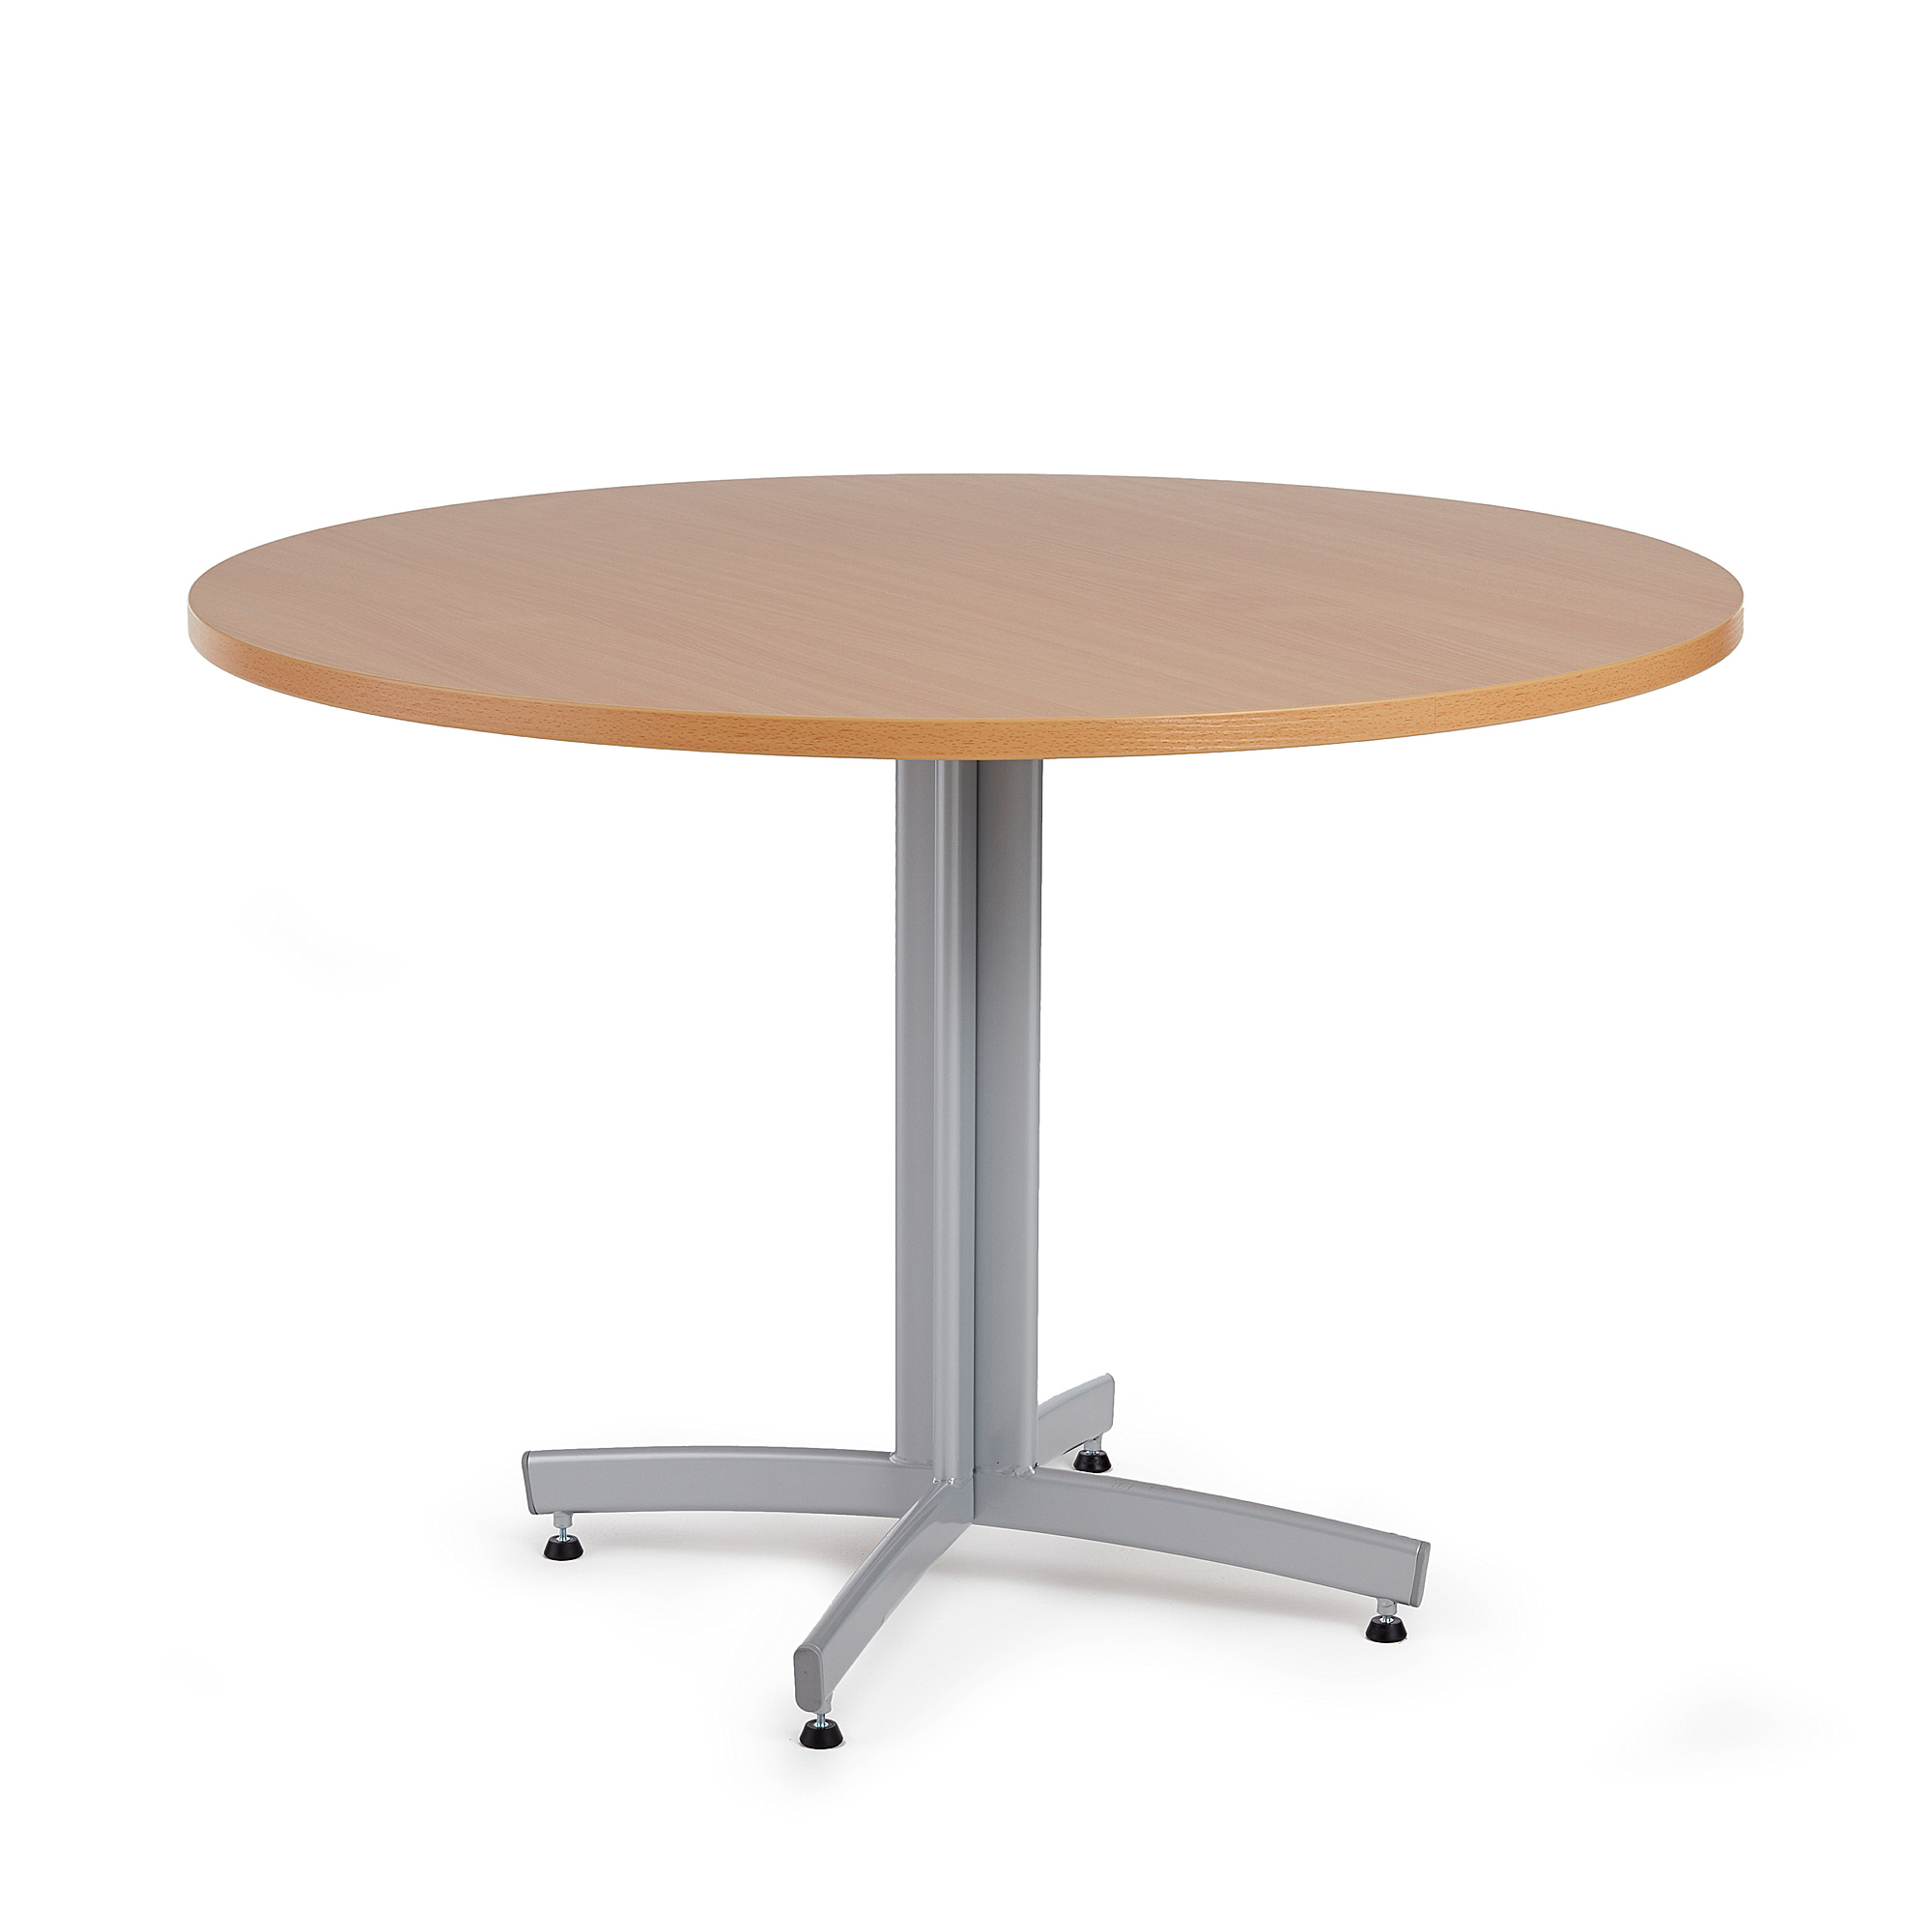 Jedálenský stôl SANNA, okrúhly Ø 1100 x V 720 mm, buk / sivá